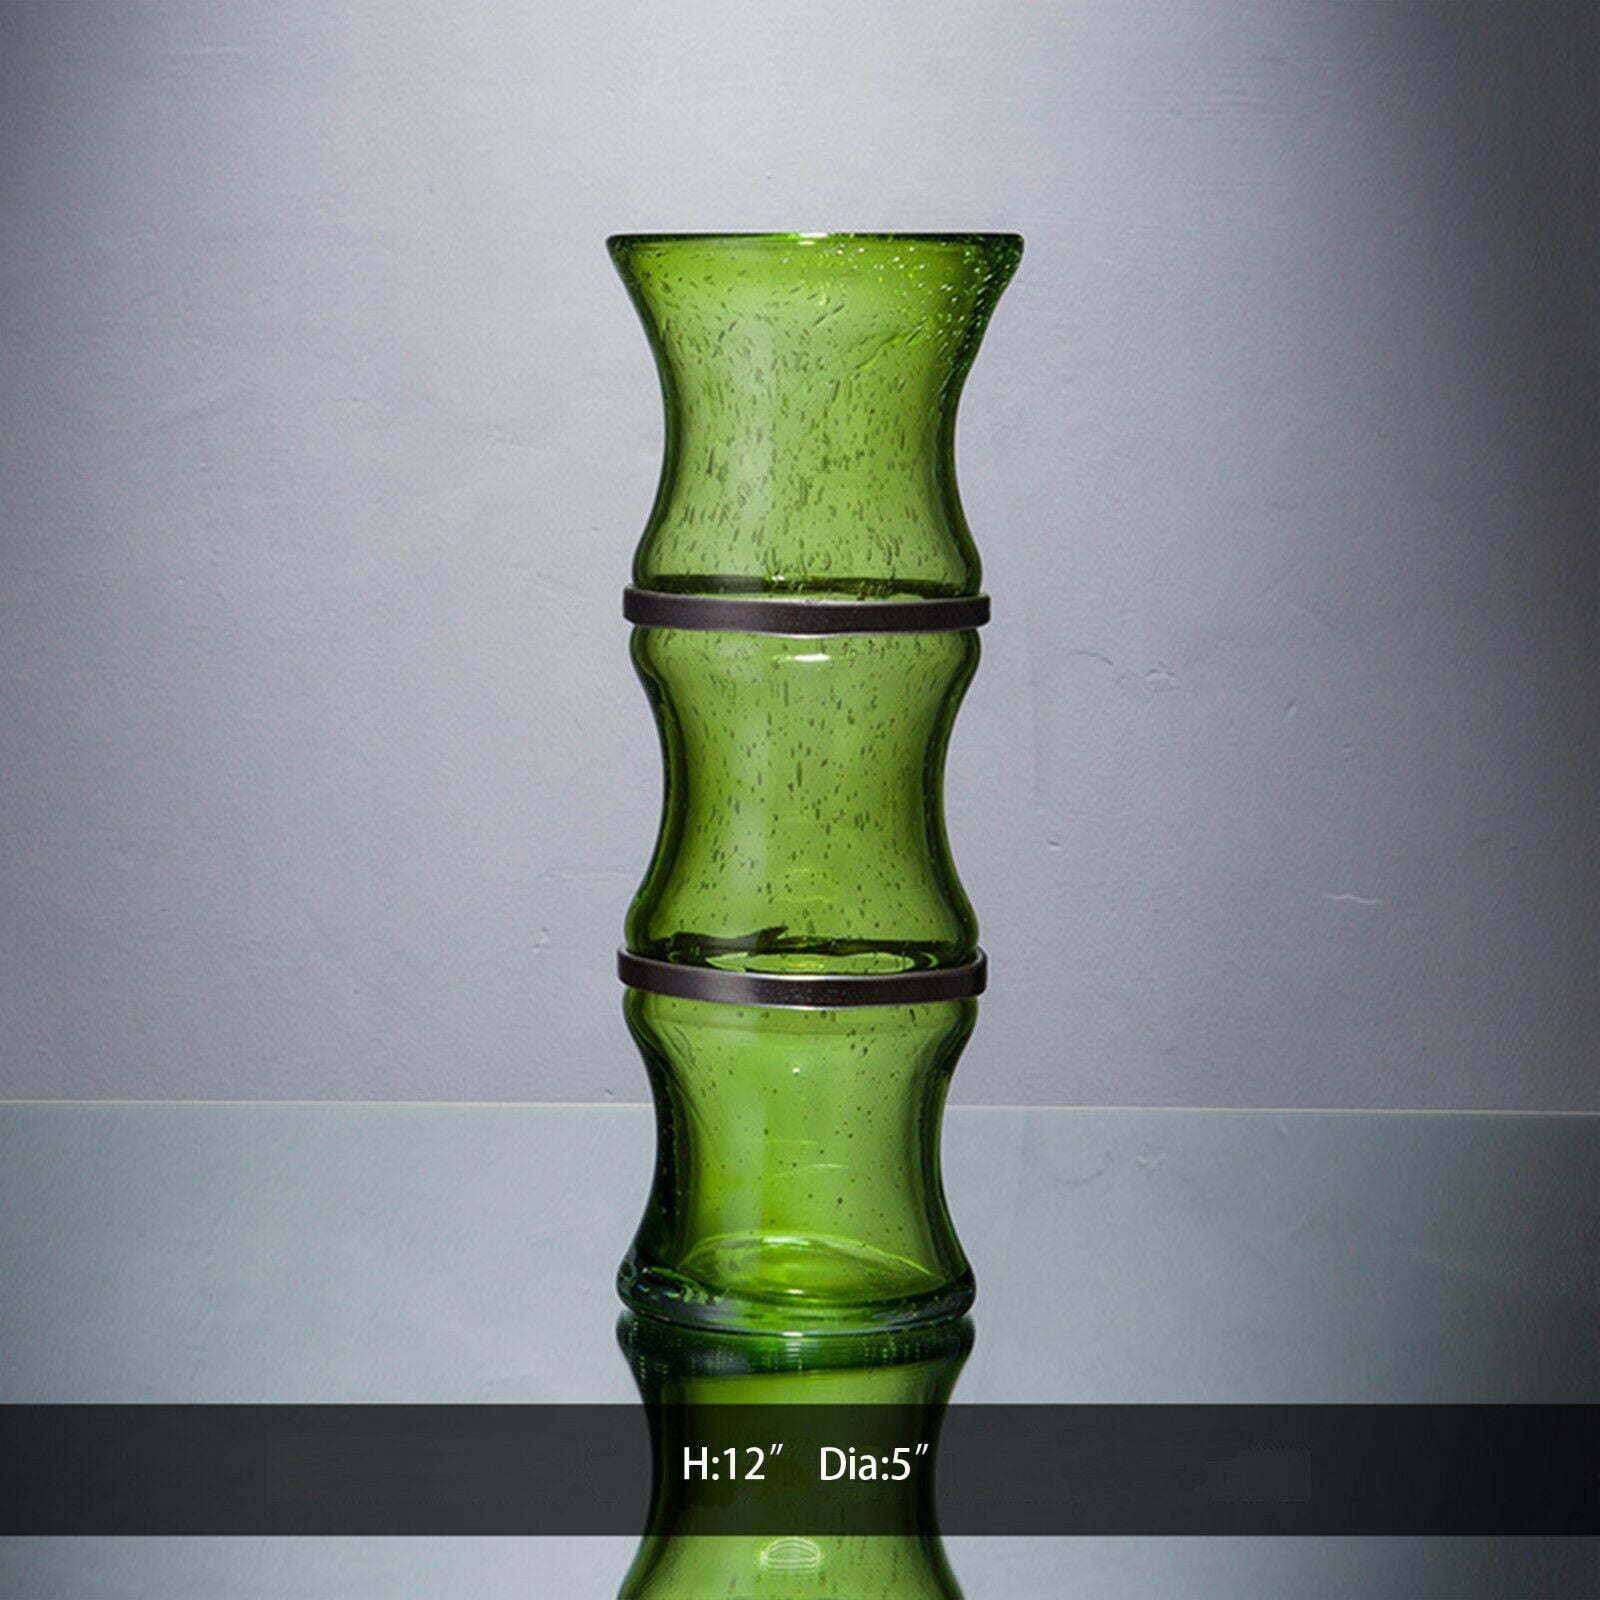 Details about   Modern Glass Vase Luxury Home Decor Creative Hydroponics Flower Arrangement Pot 